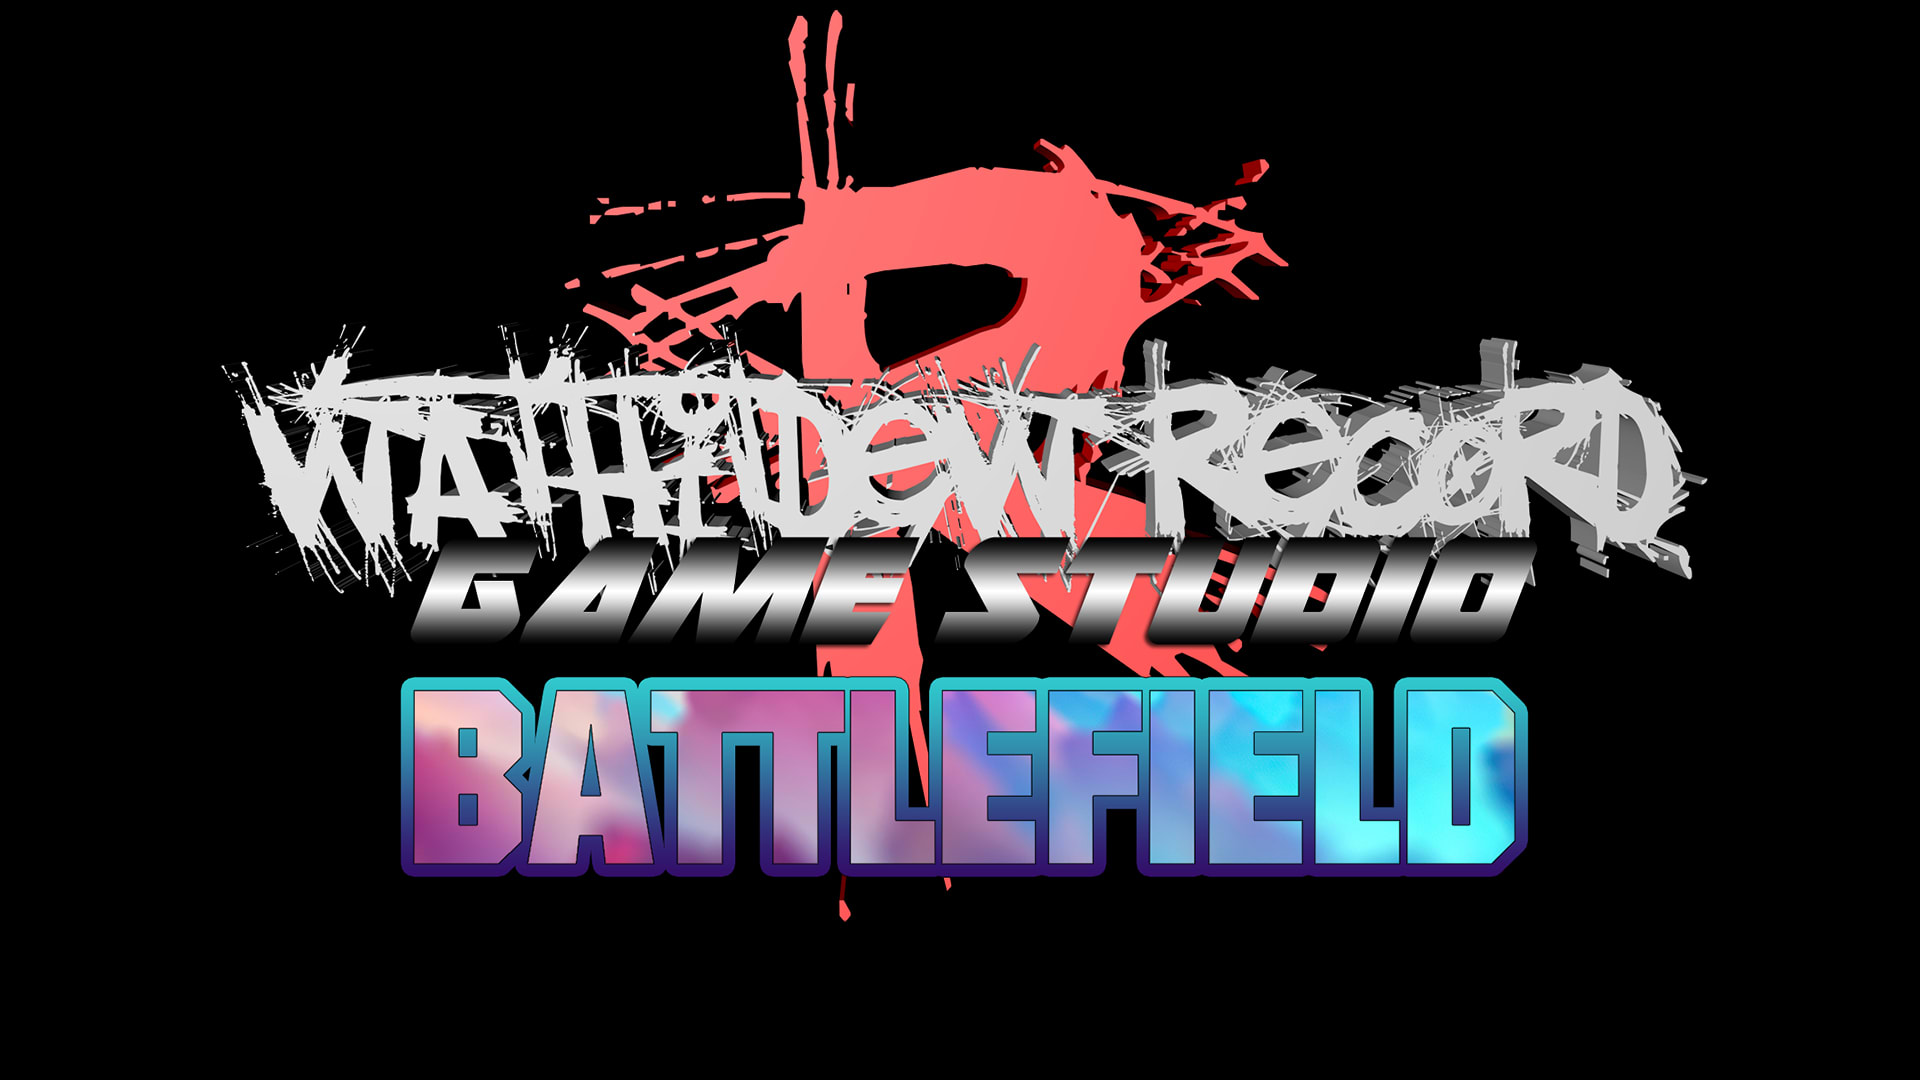 Wathitdew Record™ Game Studio BATTLEFIELD